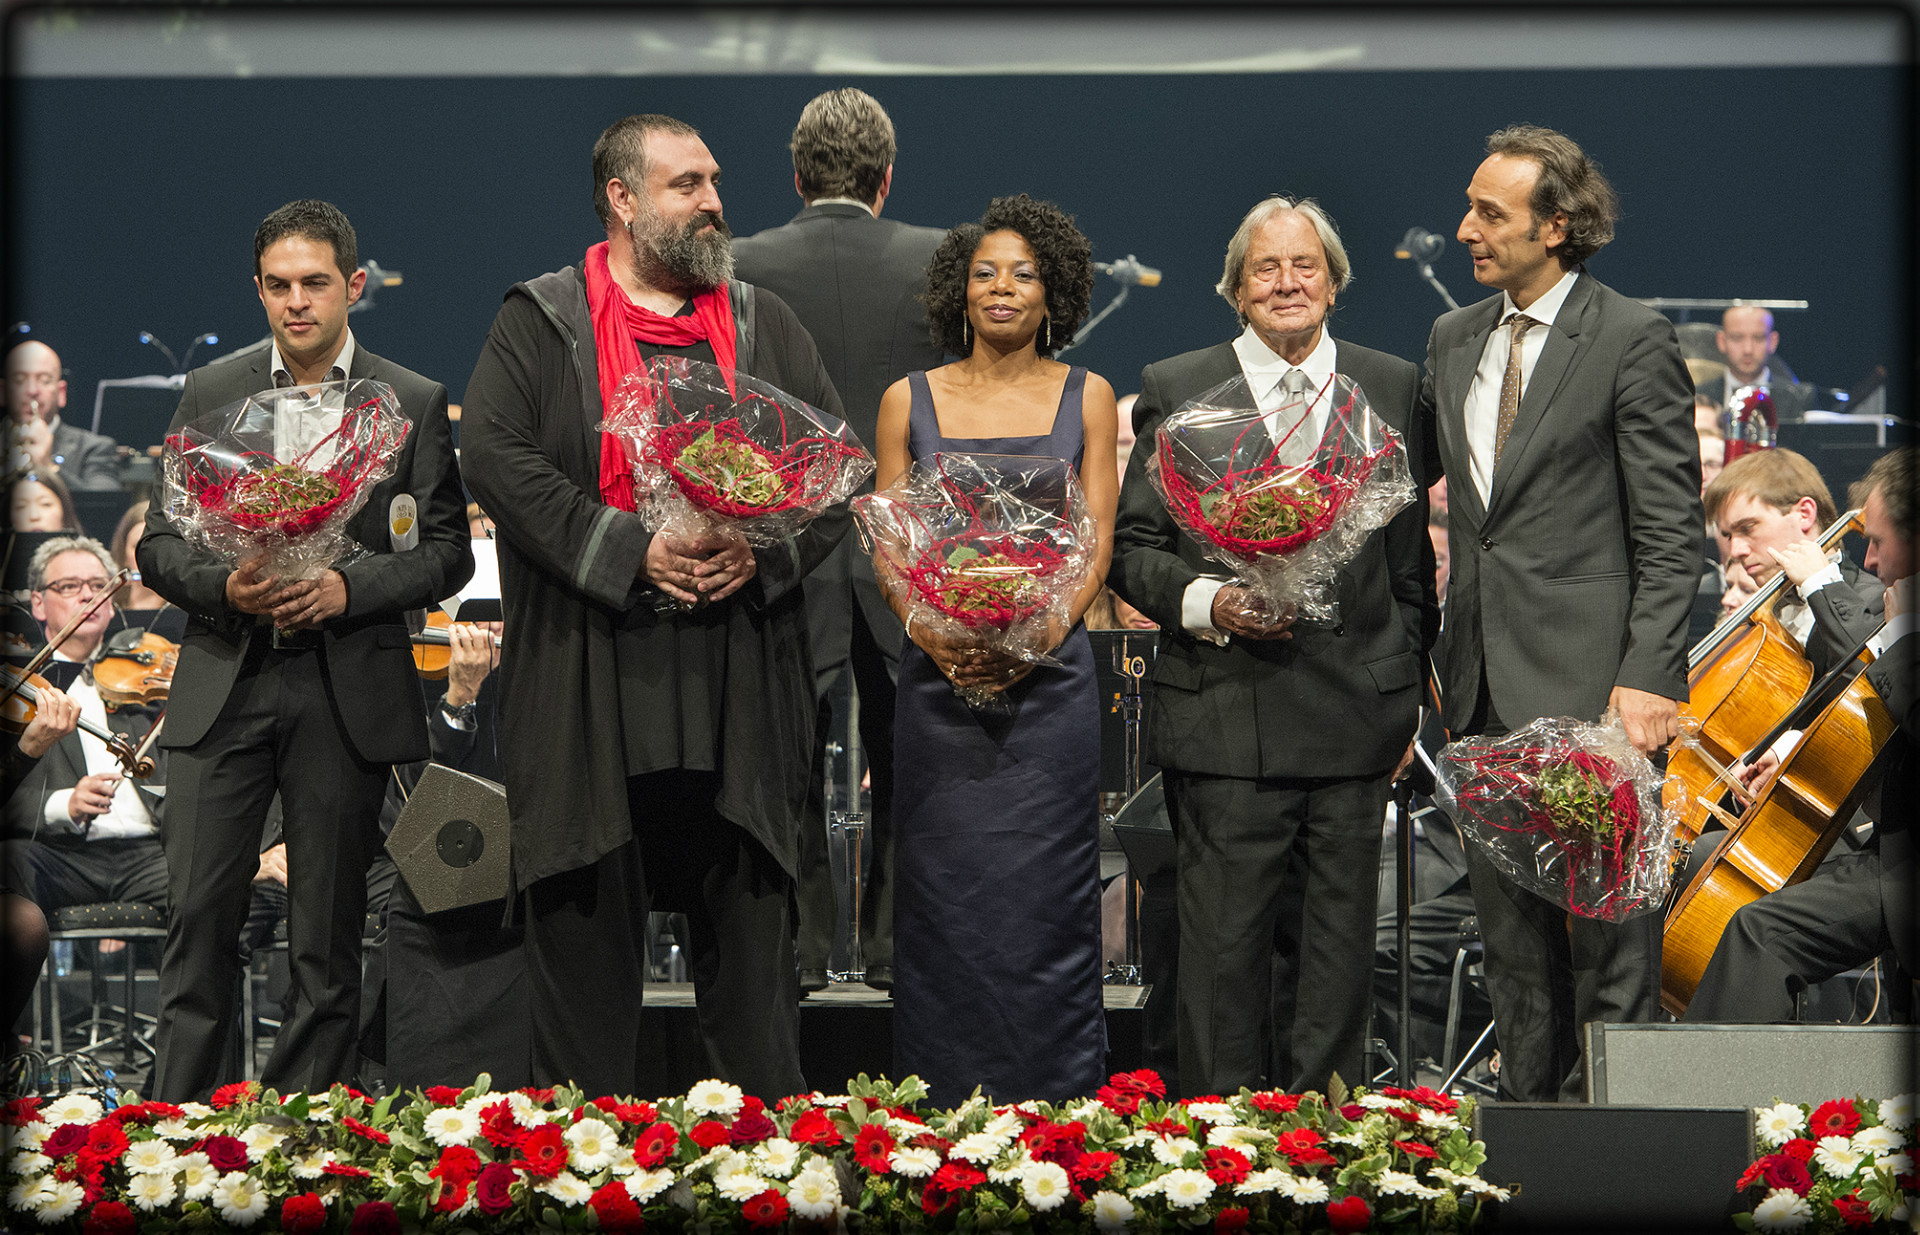 On Stage in Gent Film Festival - World Soundtrack Awards Ceremony.